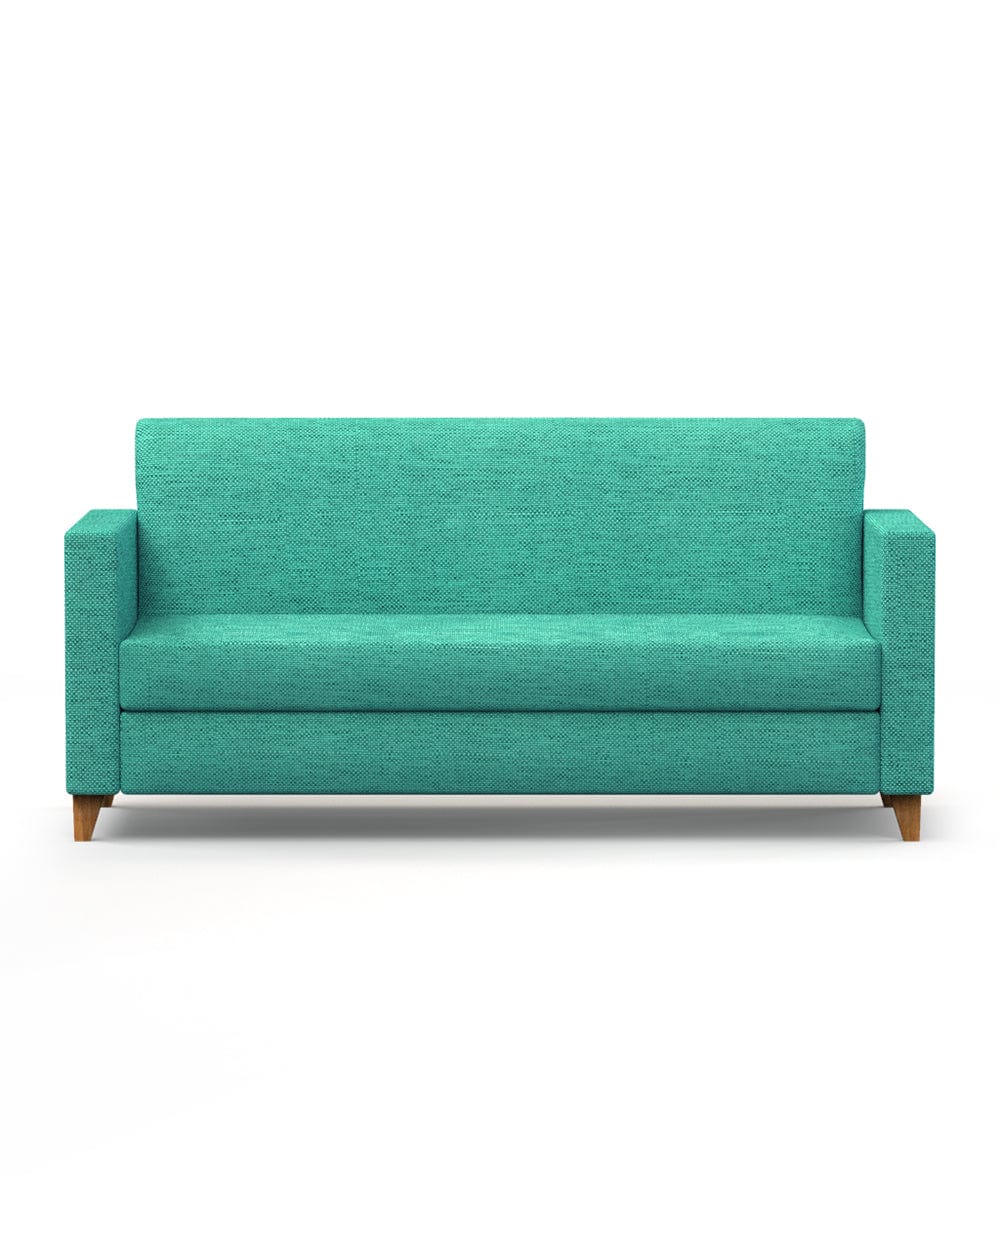 Chumbak Modern Couch-Maldivian Teal